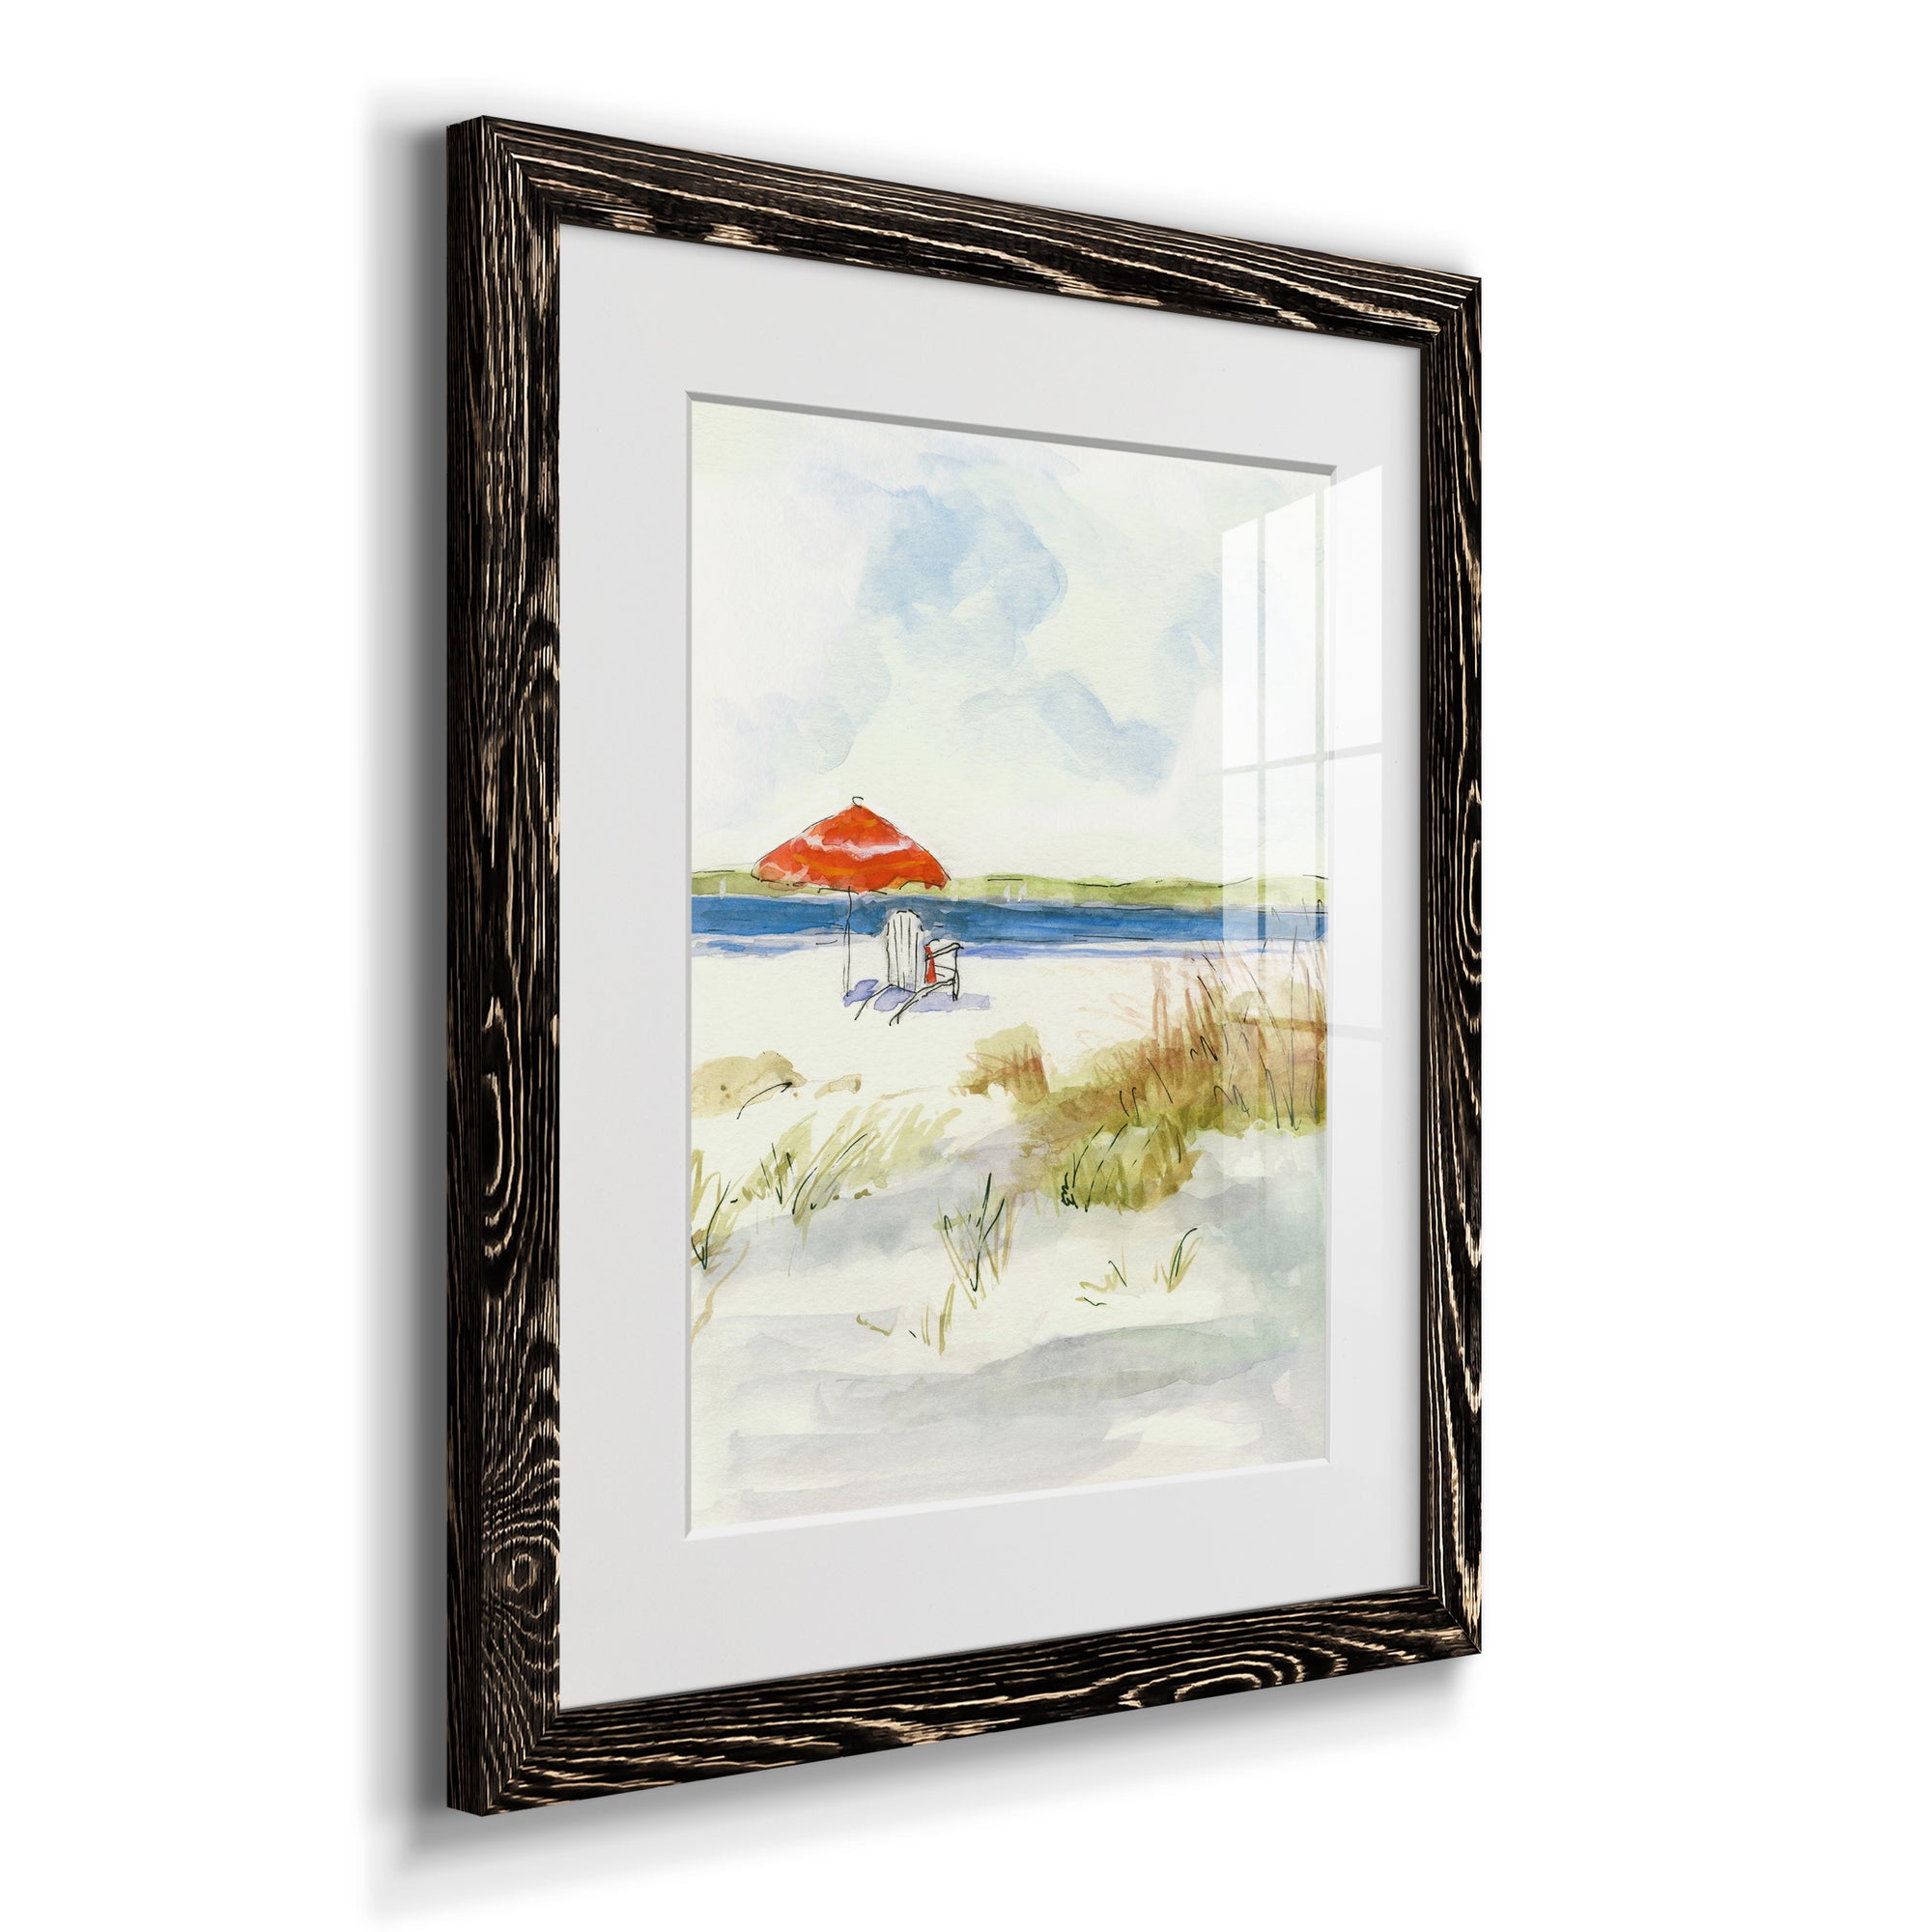 Sketchy Beach I - Premium Framed Print - Distressed Barnwood Frame - Ready to Hang